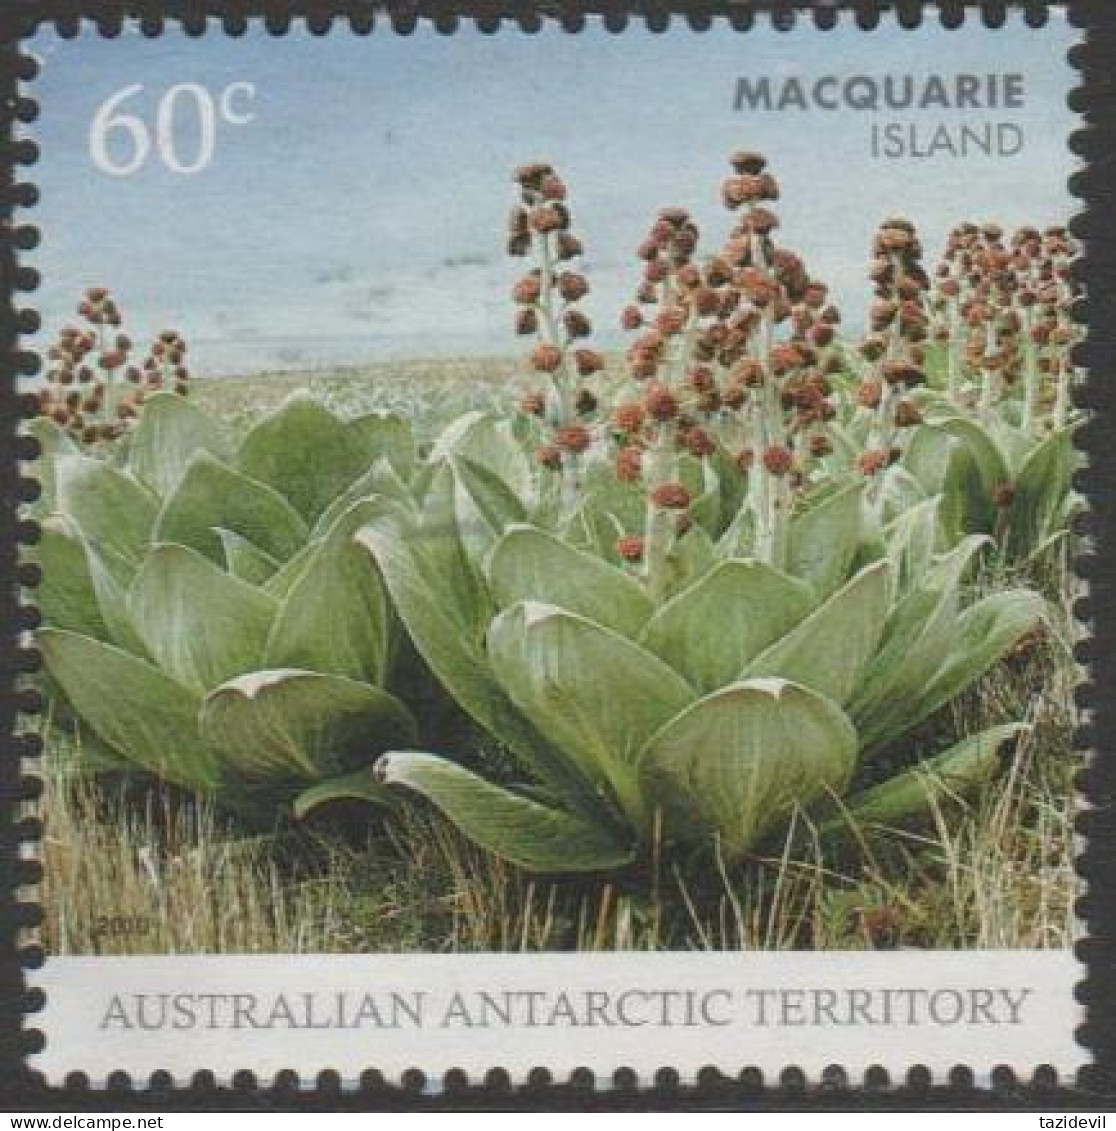 AUSTRALIALIAN ANTARCTIC TERRITORY - USED 2010 60c Macquarie Island - Flowers - Gebraucht